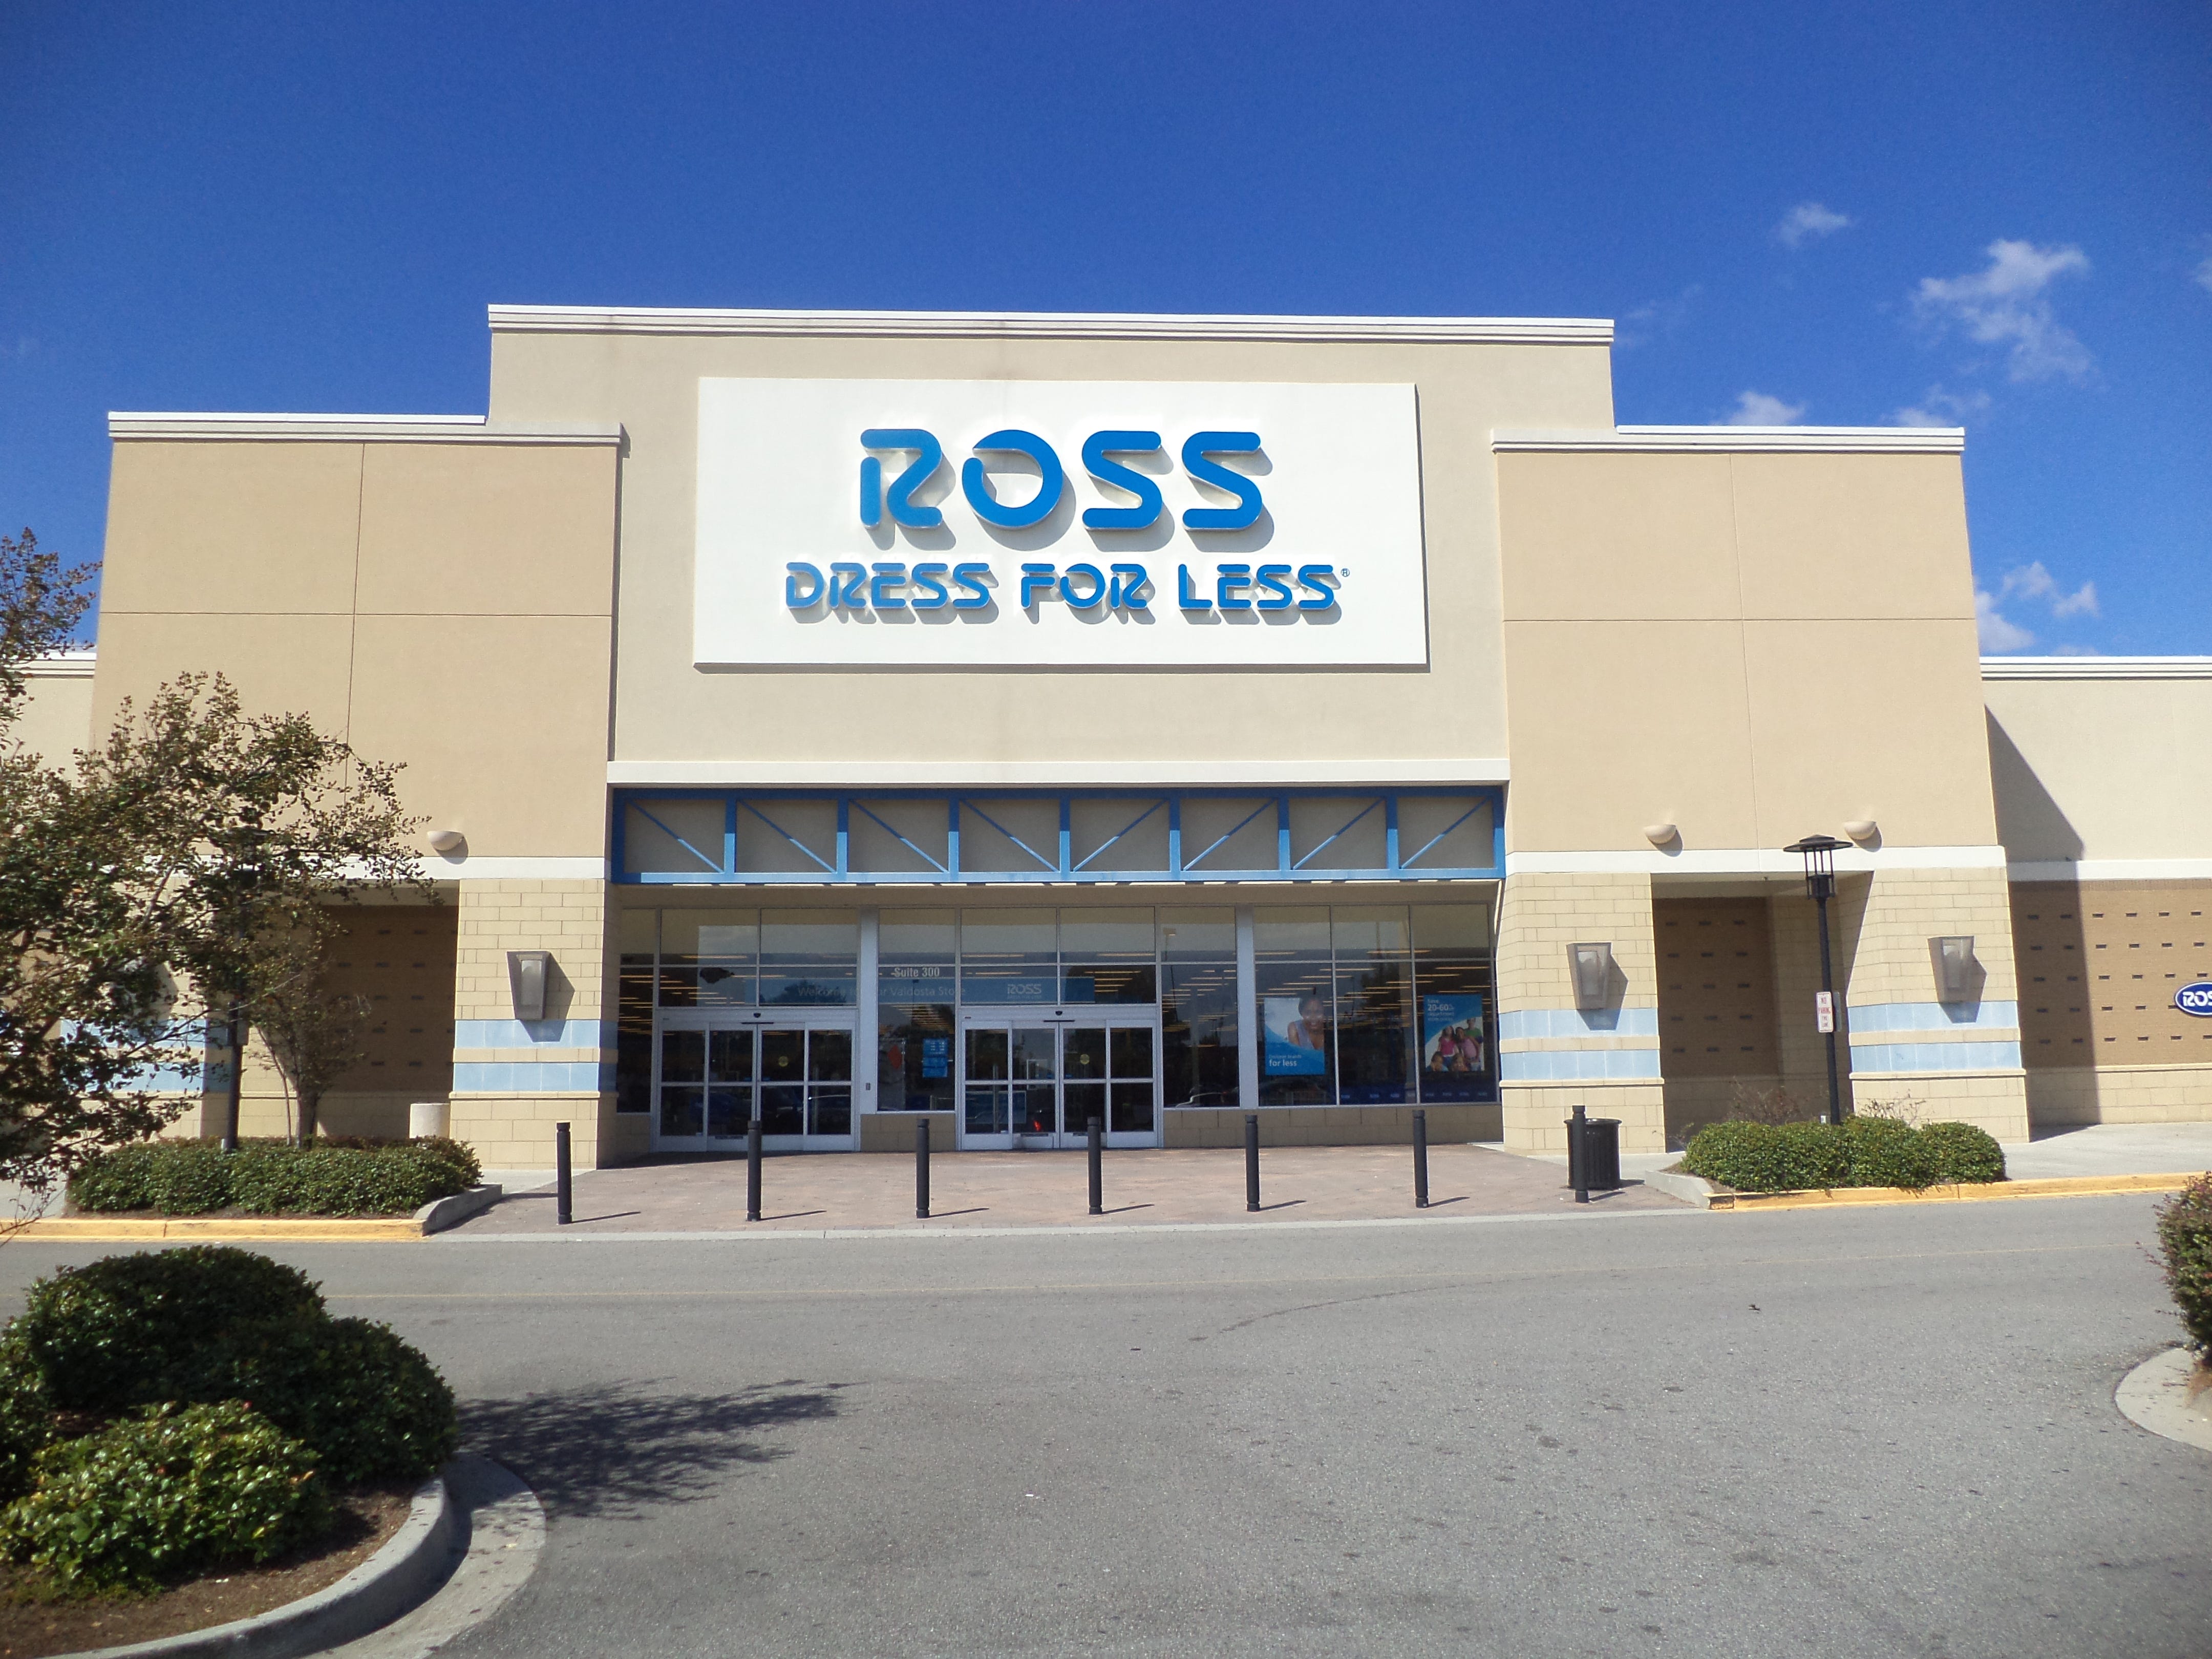 Stores near me. Ross магазин. Ross магазин в Америке. Ross Dress for less. ЦУМ Росс.